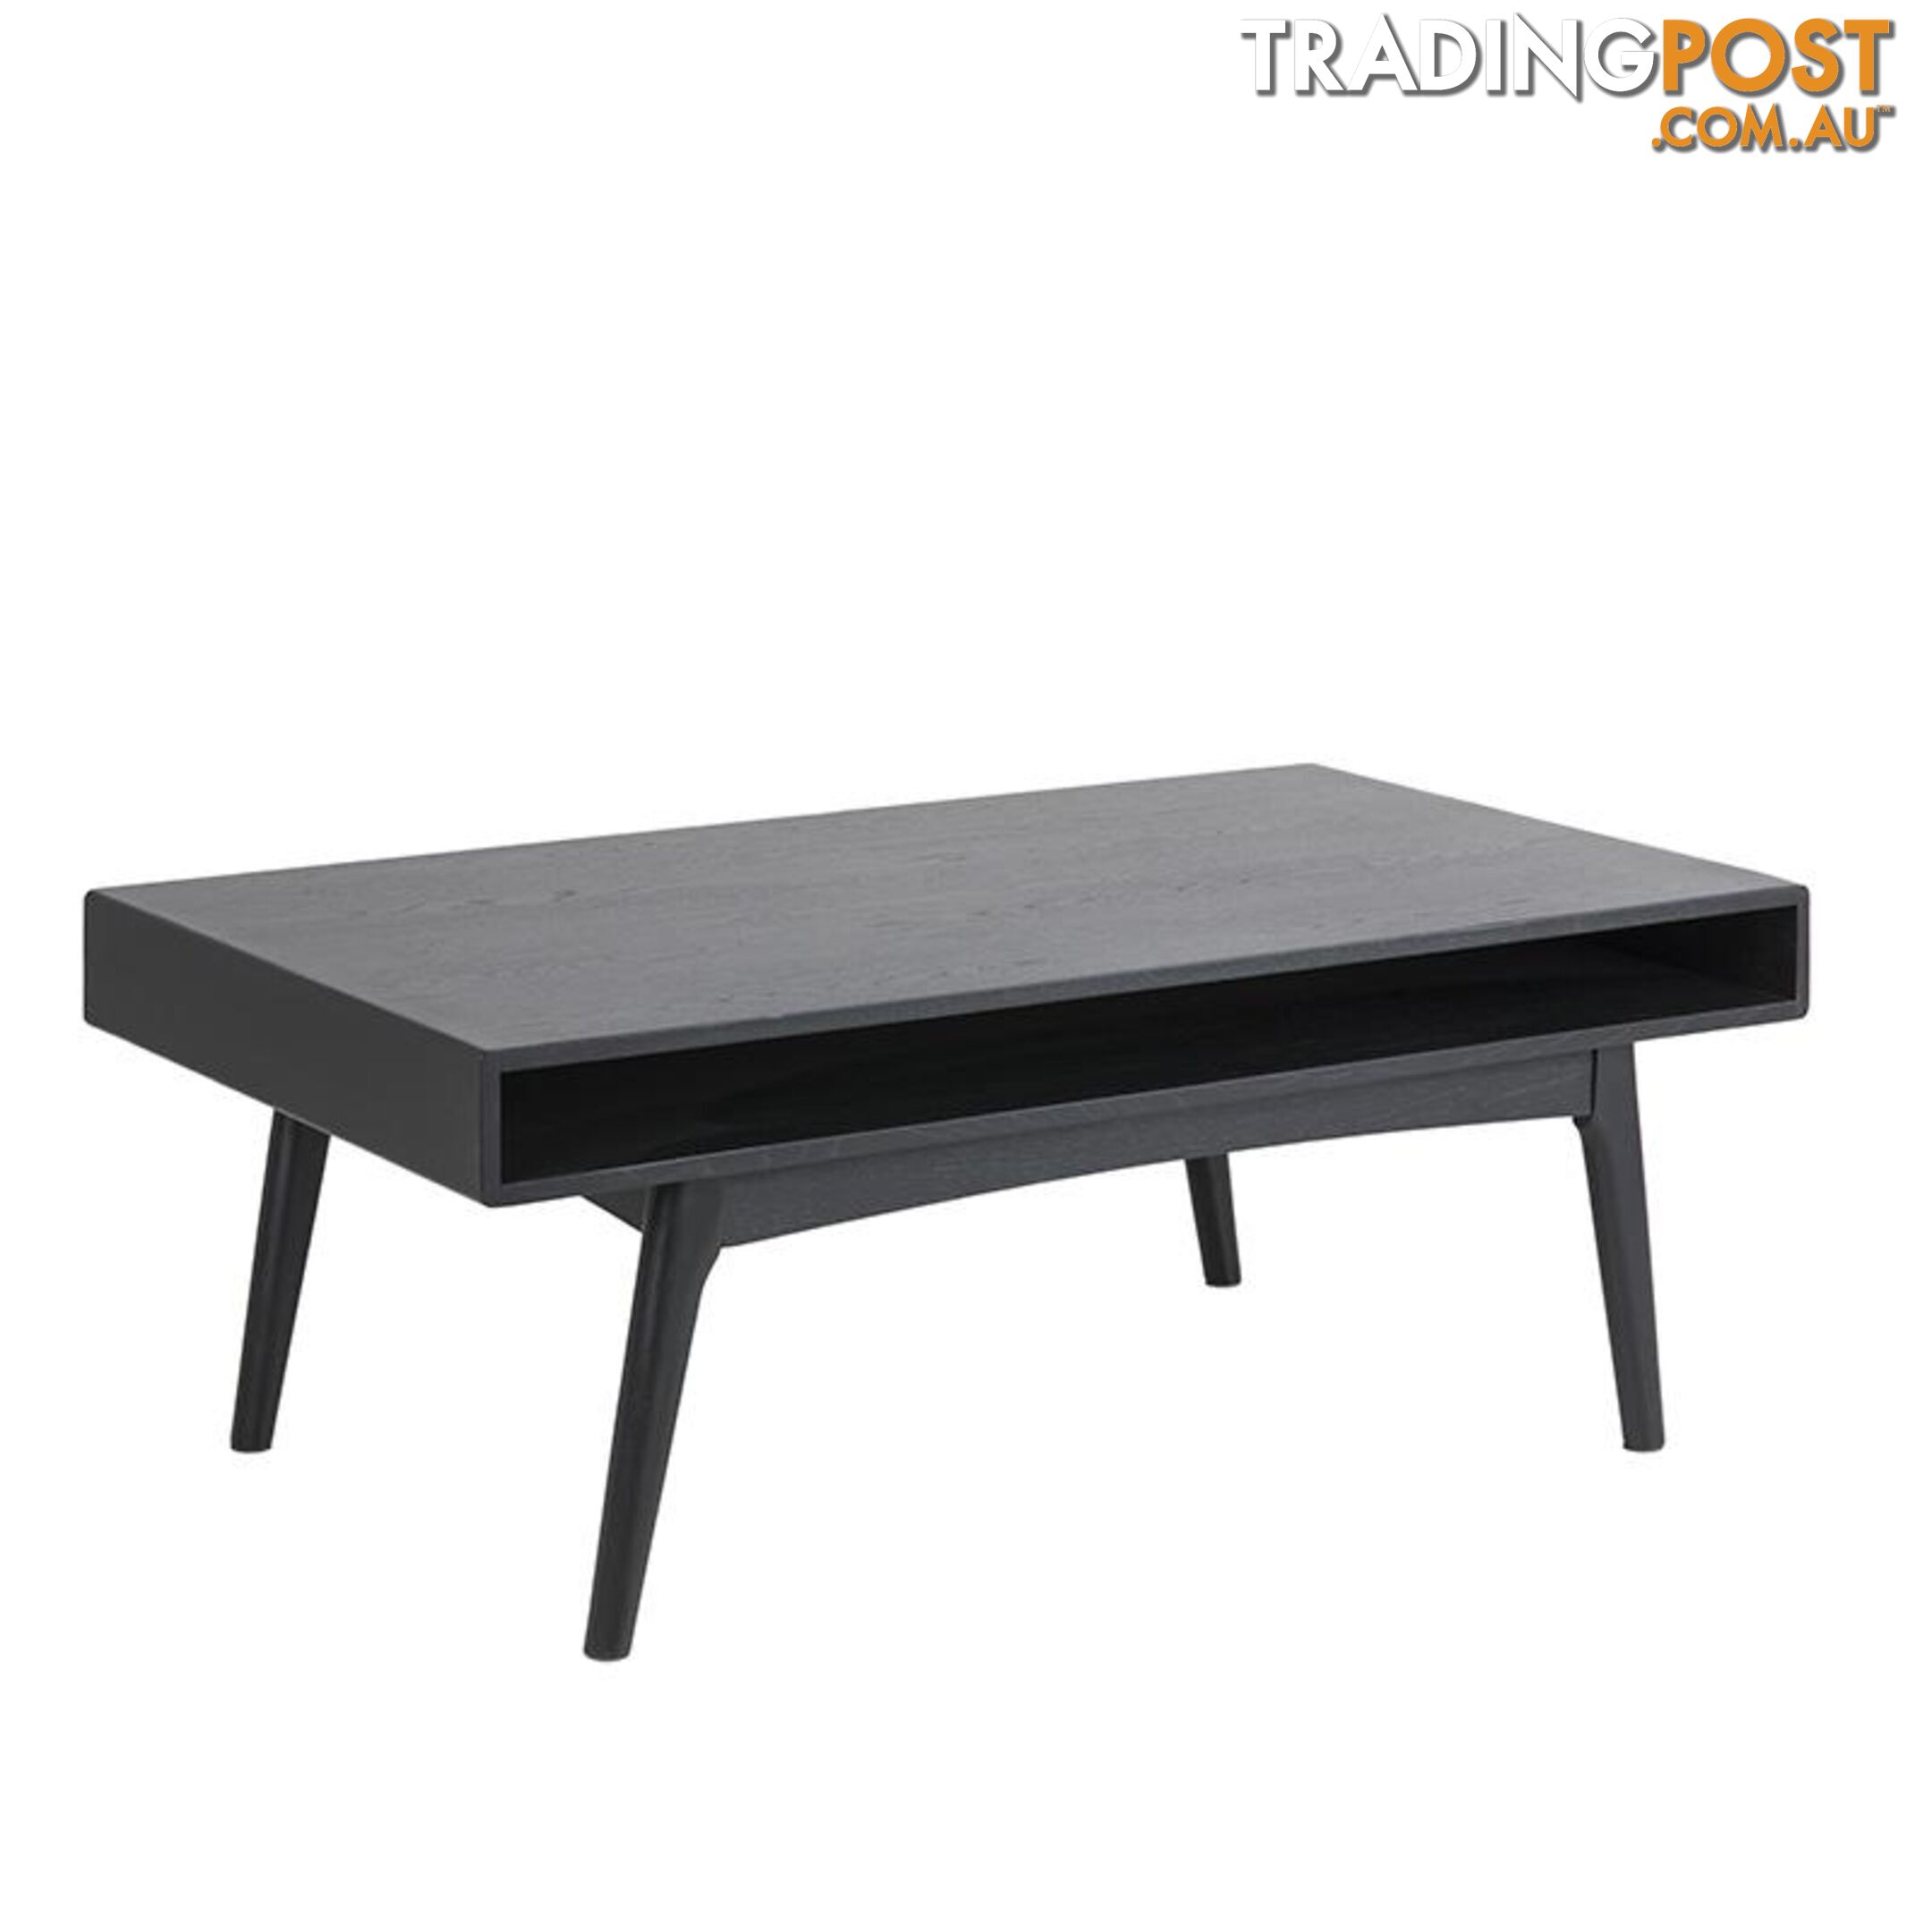 MAKO Coffee Table 130cm - Black - AC-0000078610 - 5713941028761